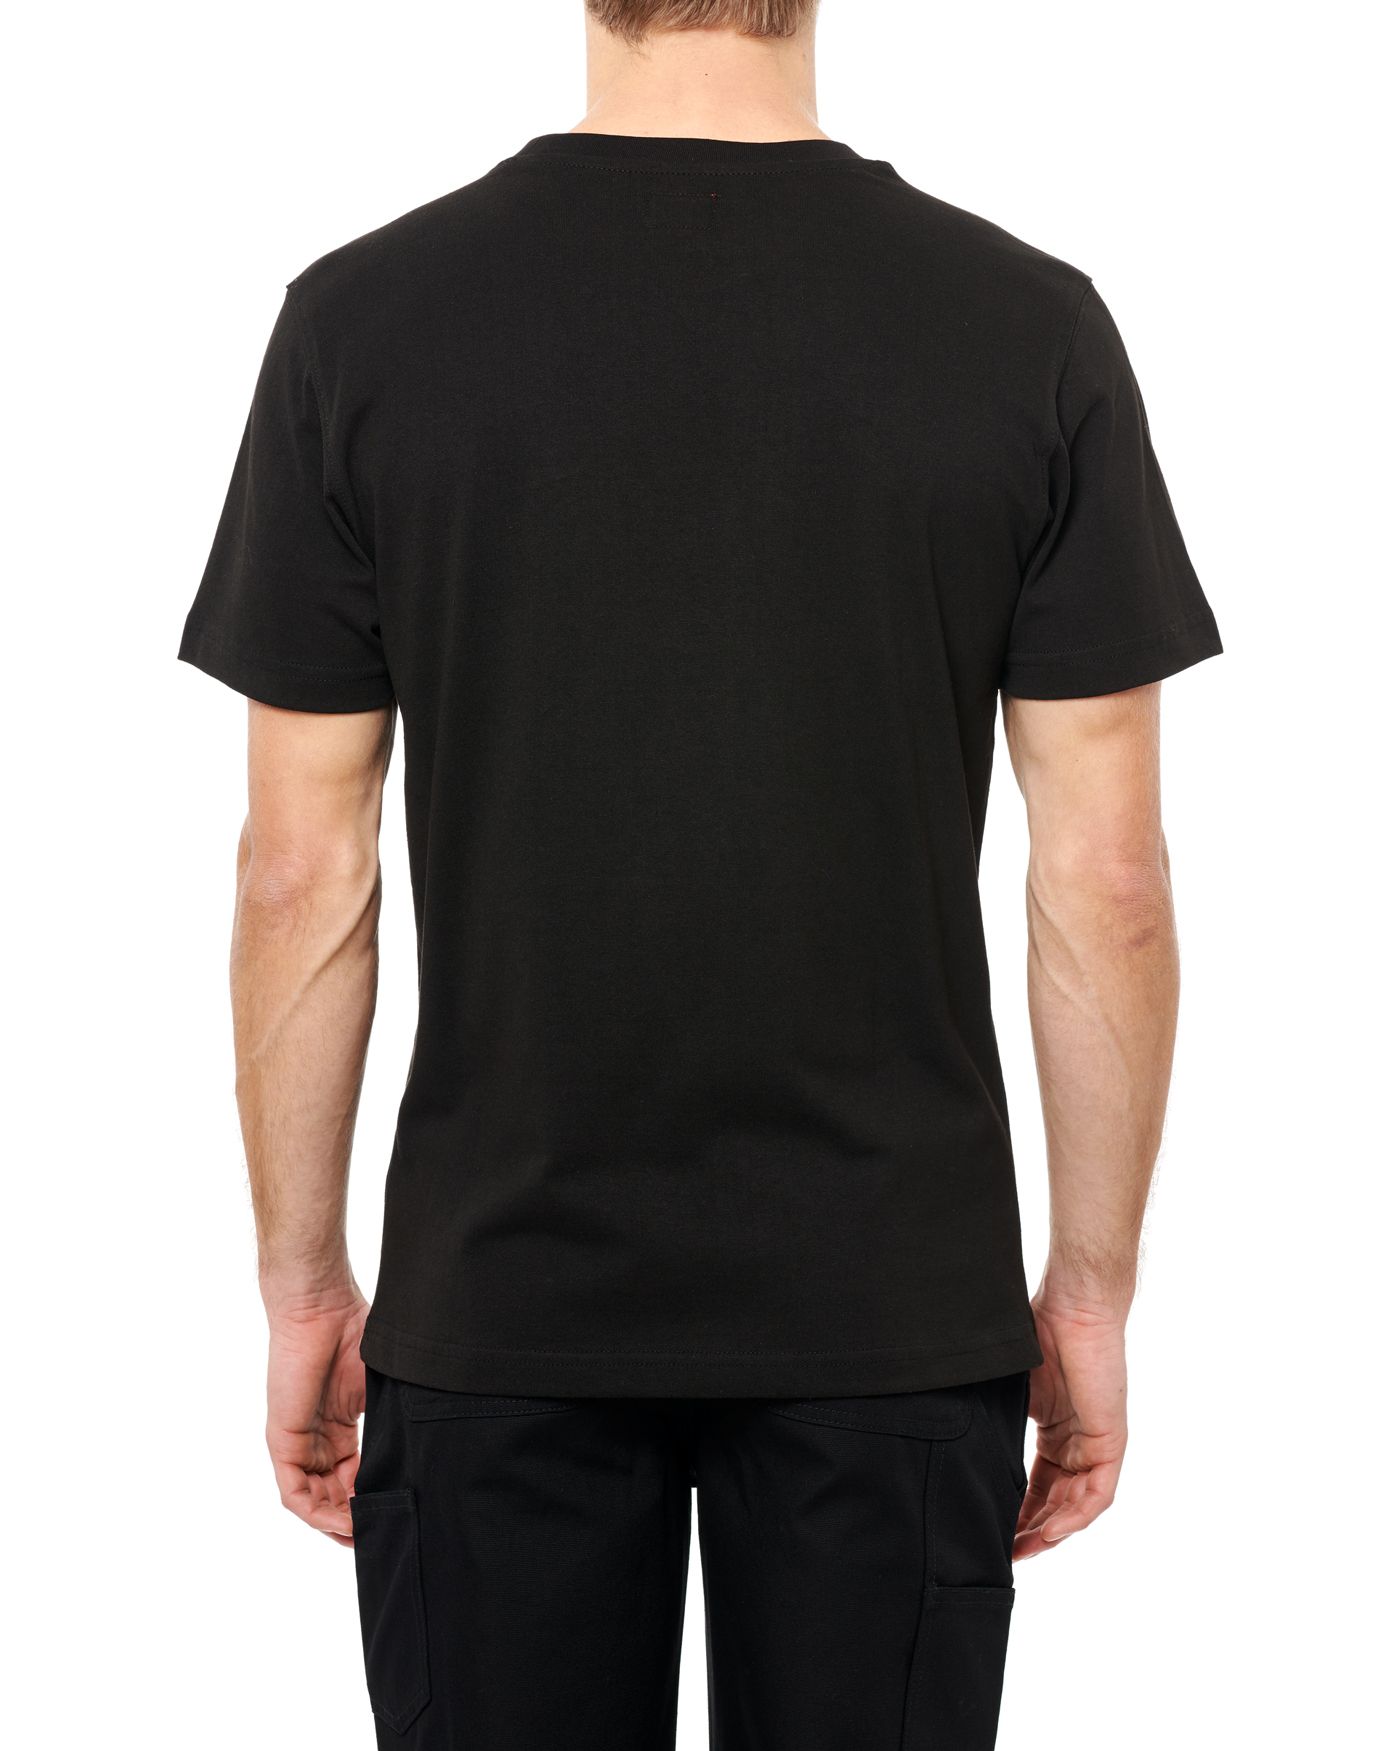 Photo of Bob Cat S/S T-shirt, Black